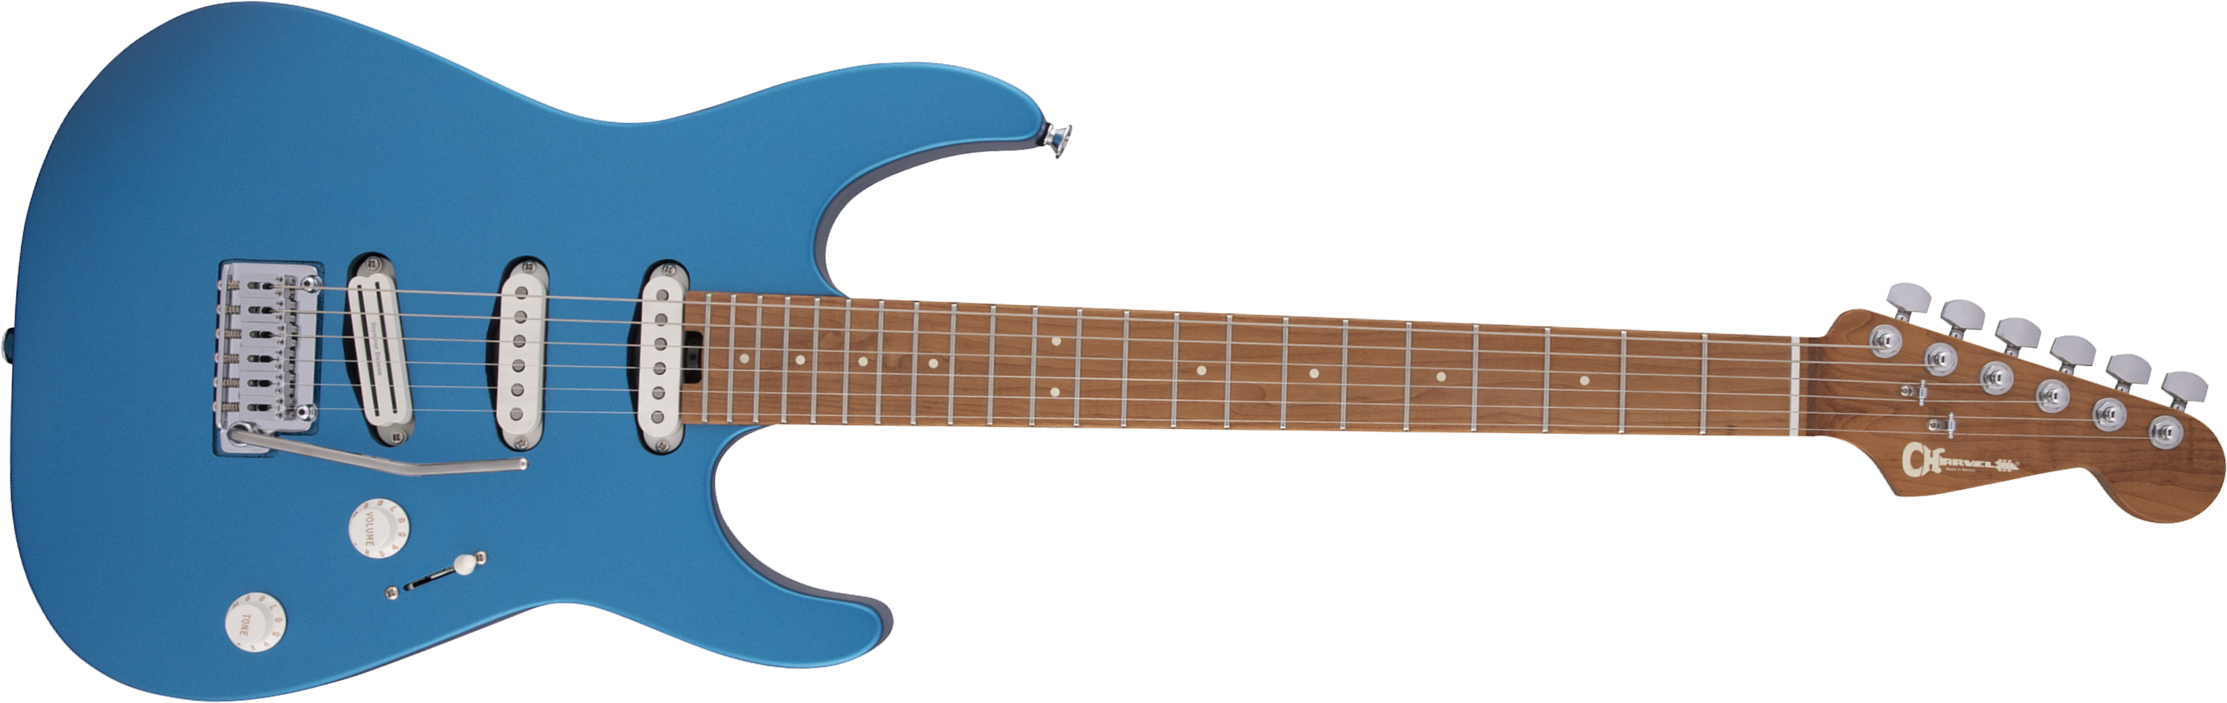 Charvel Dinky Dk22 Sss 2pt Cm Pro-mod 3s Seymour Duncan Mn - Electric Blue - Guitarra electrica metalica - Main picture